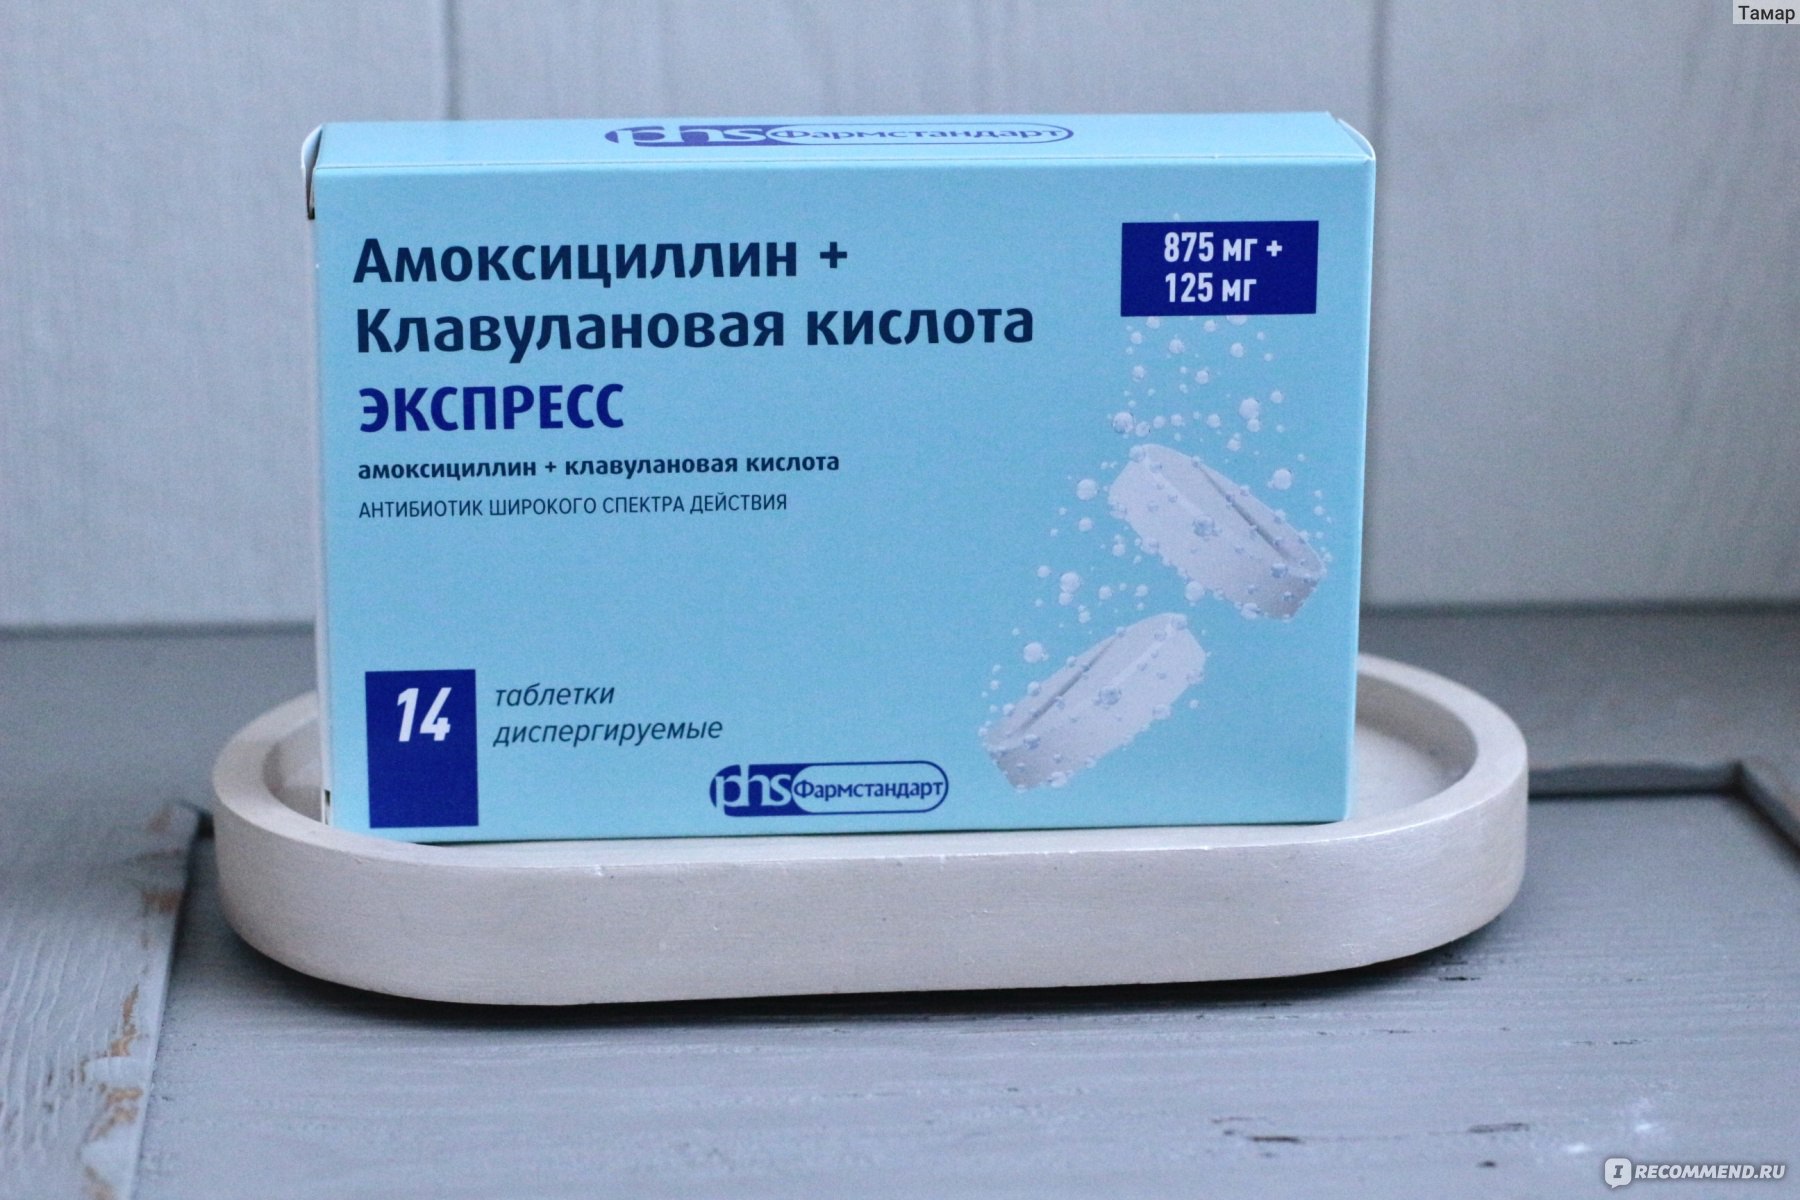 Антибиотик Фармстандарт ЗАО Лекко Амоксициллин+Клавулановая кислота .